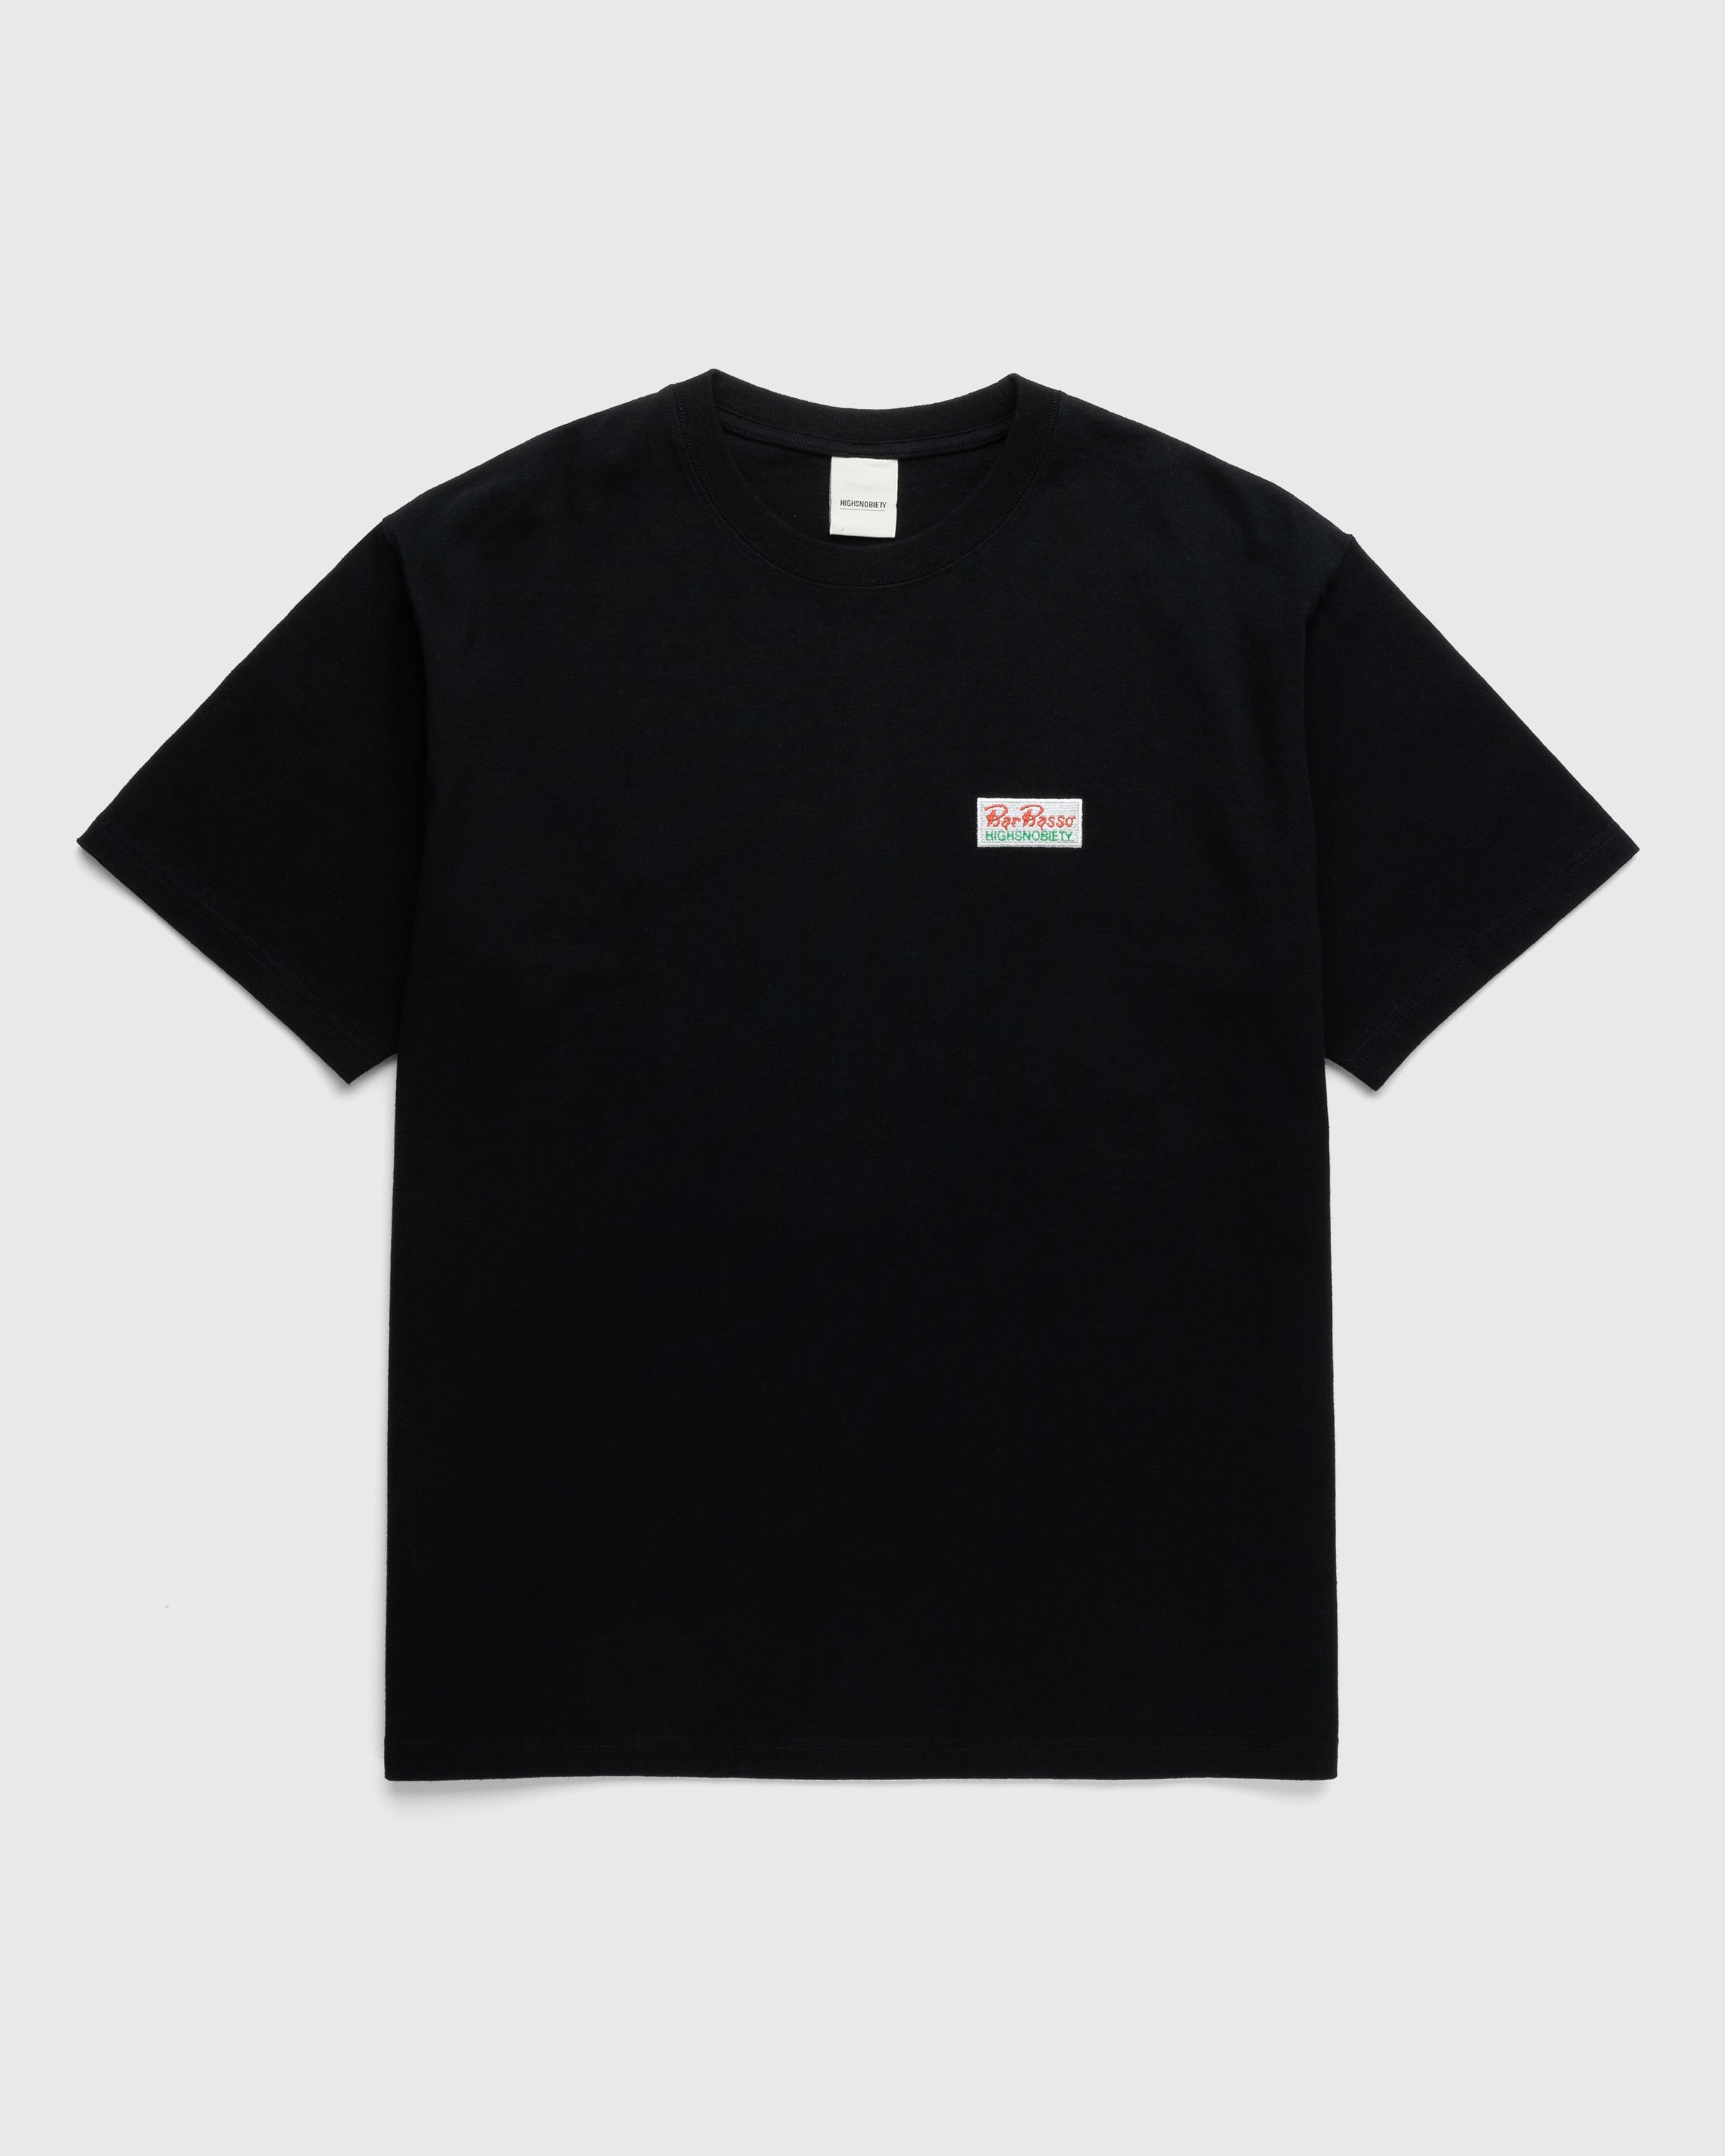 Bar Basso x Highsnobiety – Sbagliato T-Shirt Black - Tops - Black - Image 2